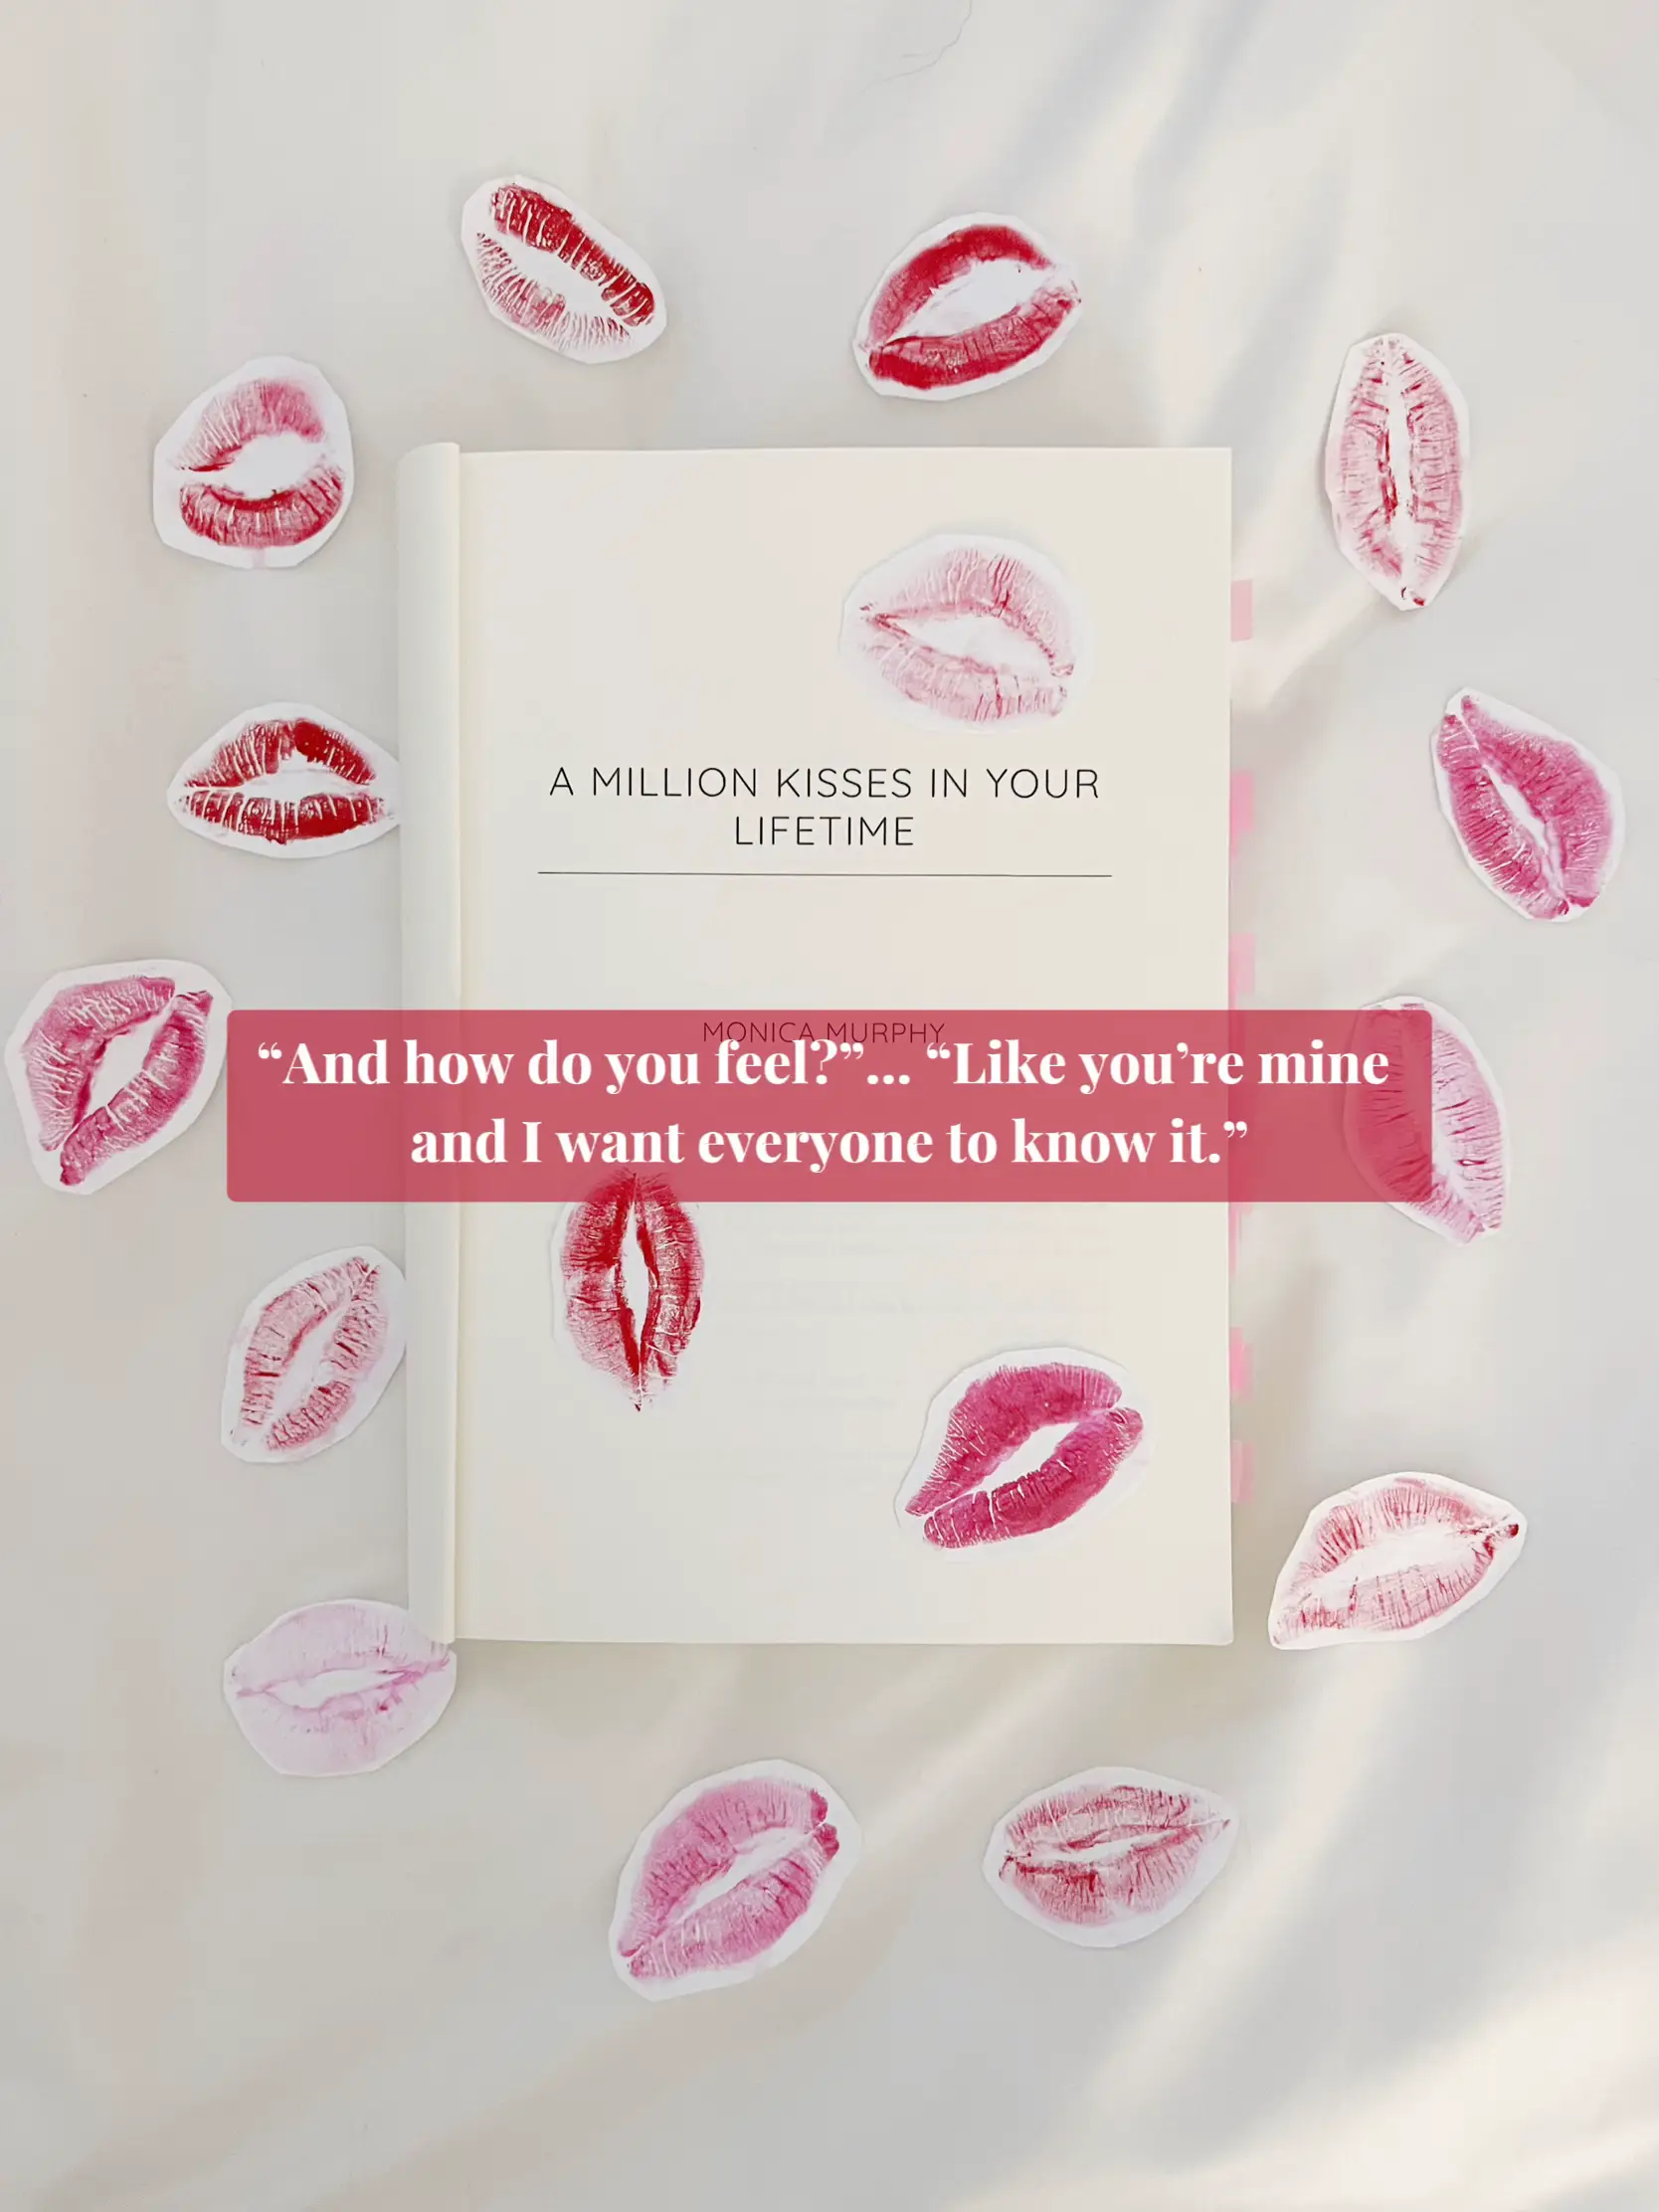  A million kisses in your lifetime.